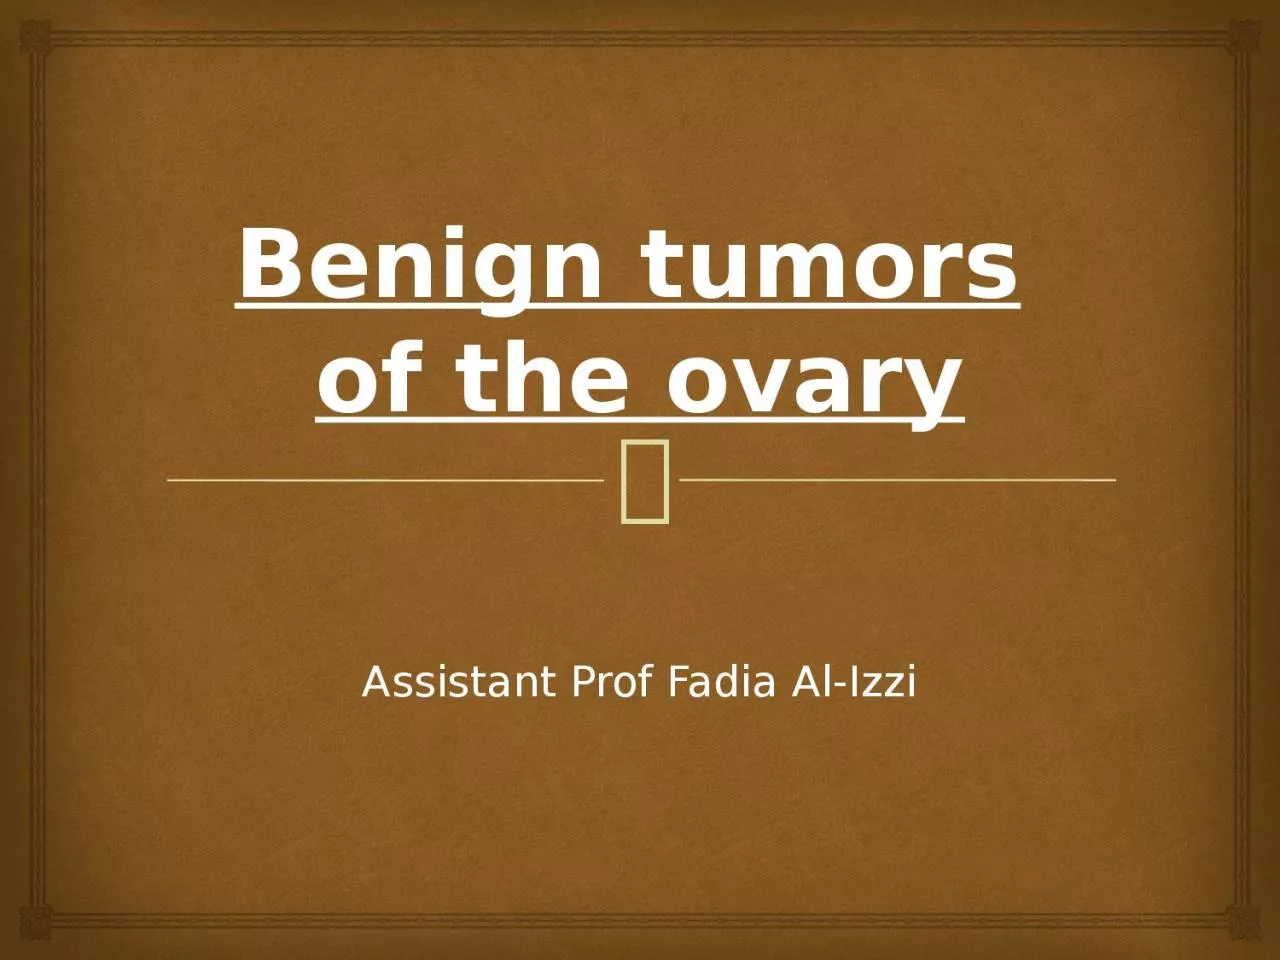 Benign tumors of the ovary